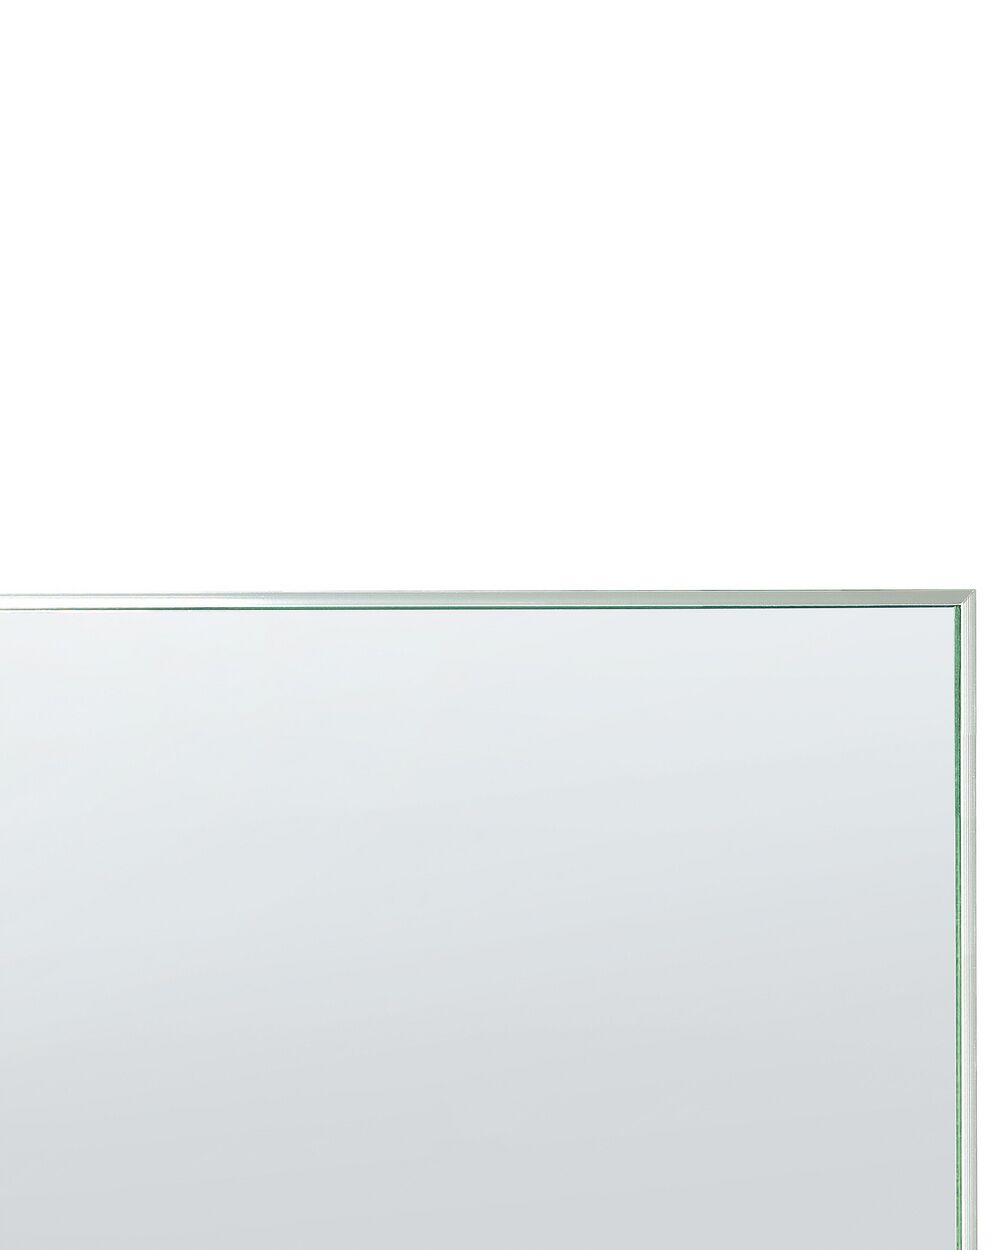 Staande spiegel zilver 50 x 156 cm BEAUVAIS - Gratis Levering